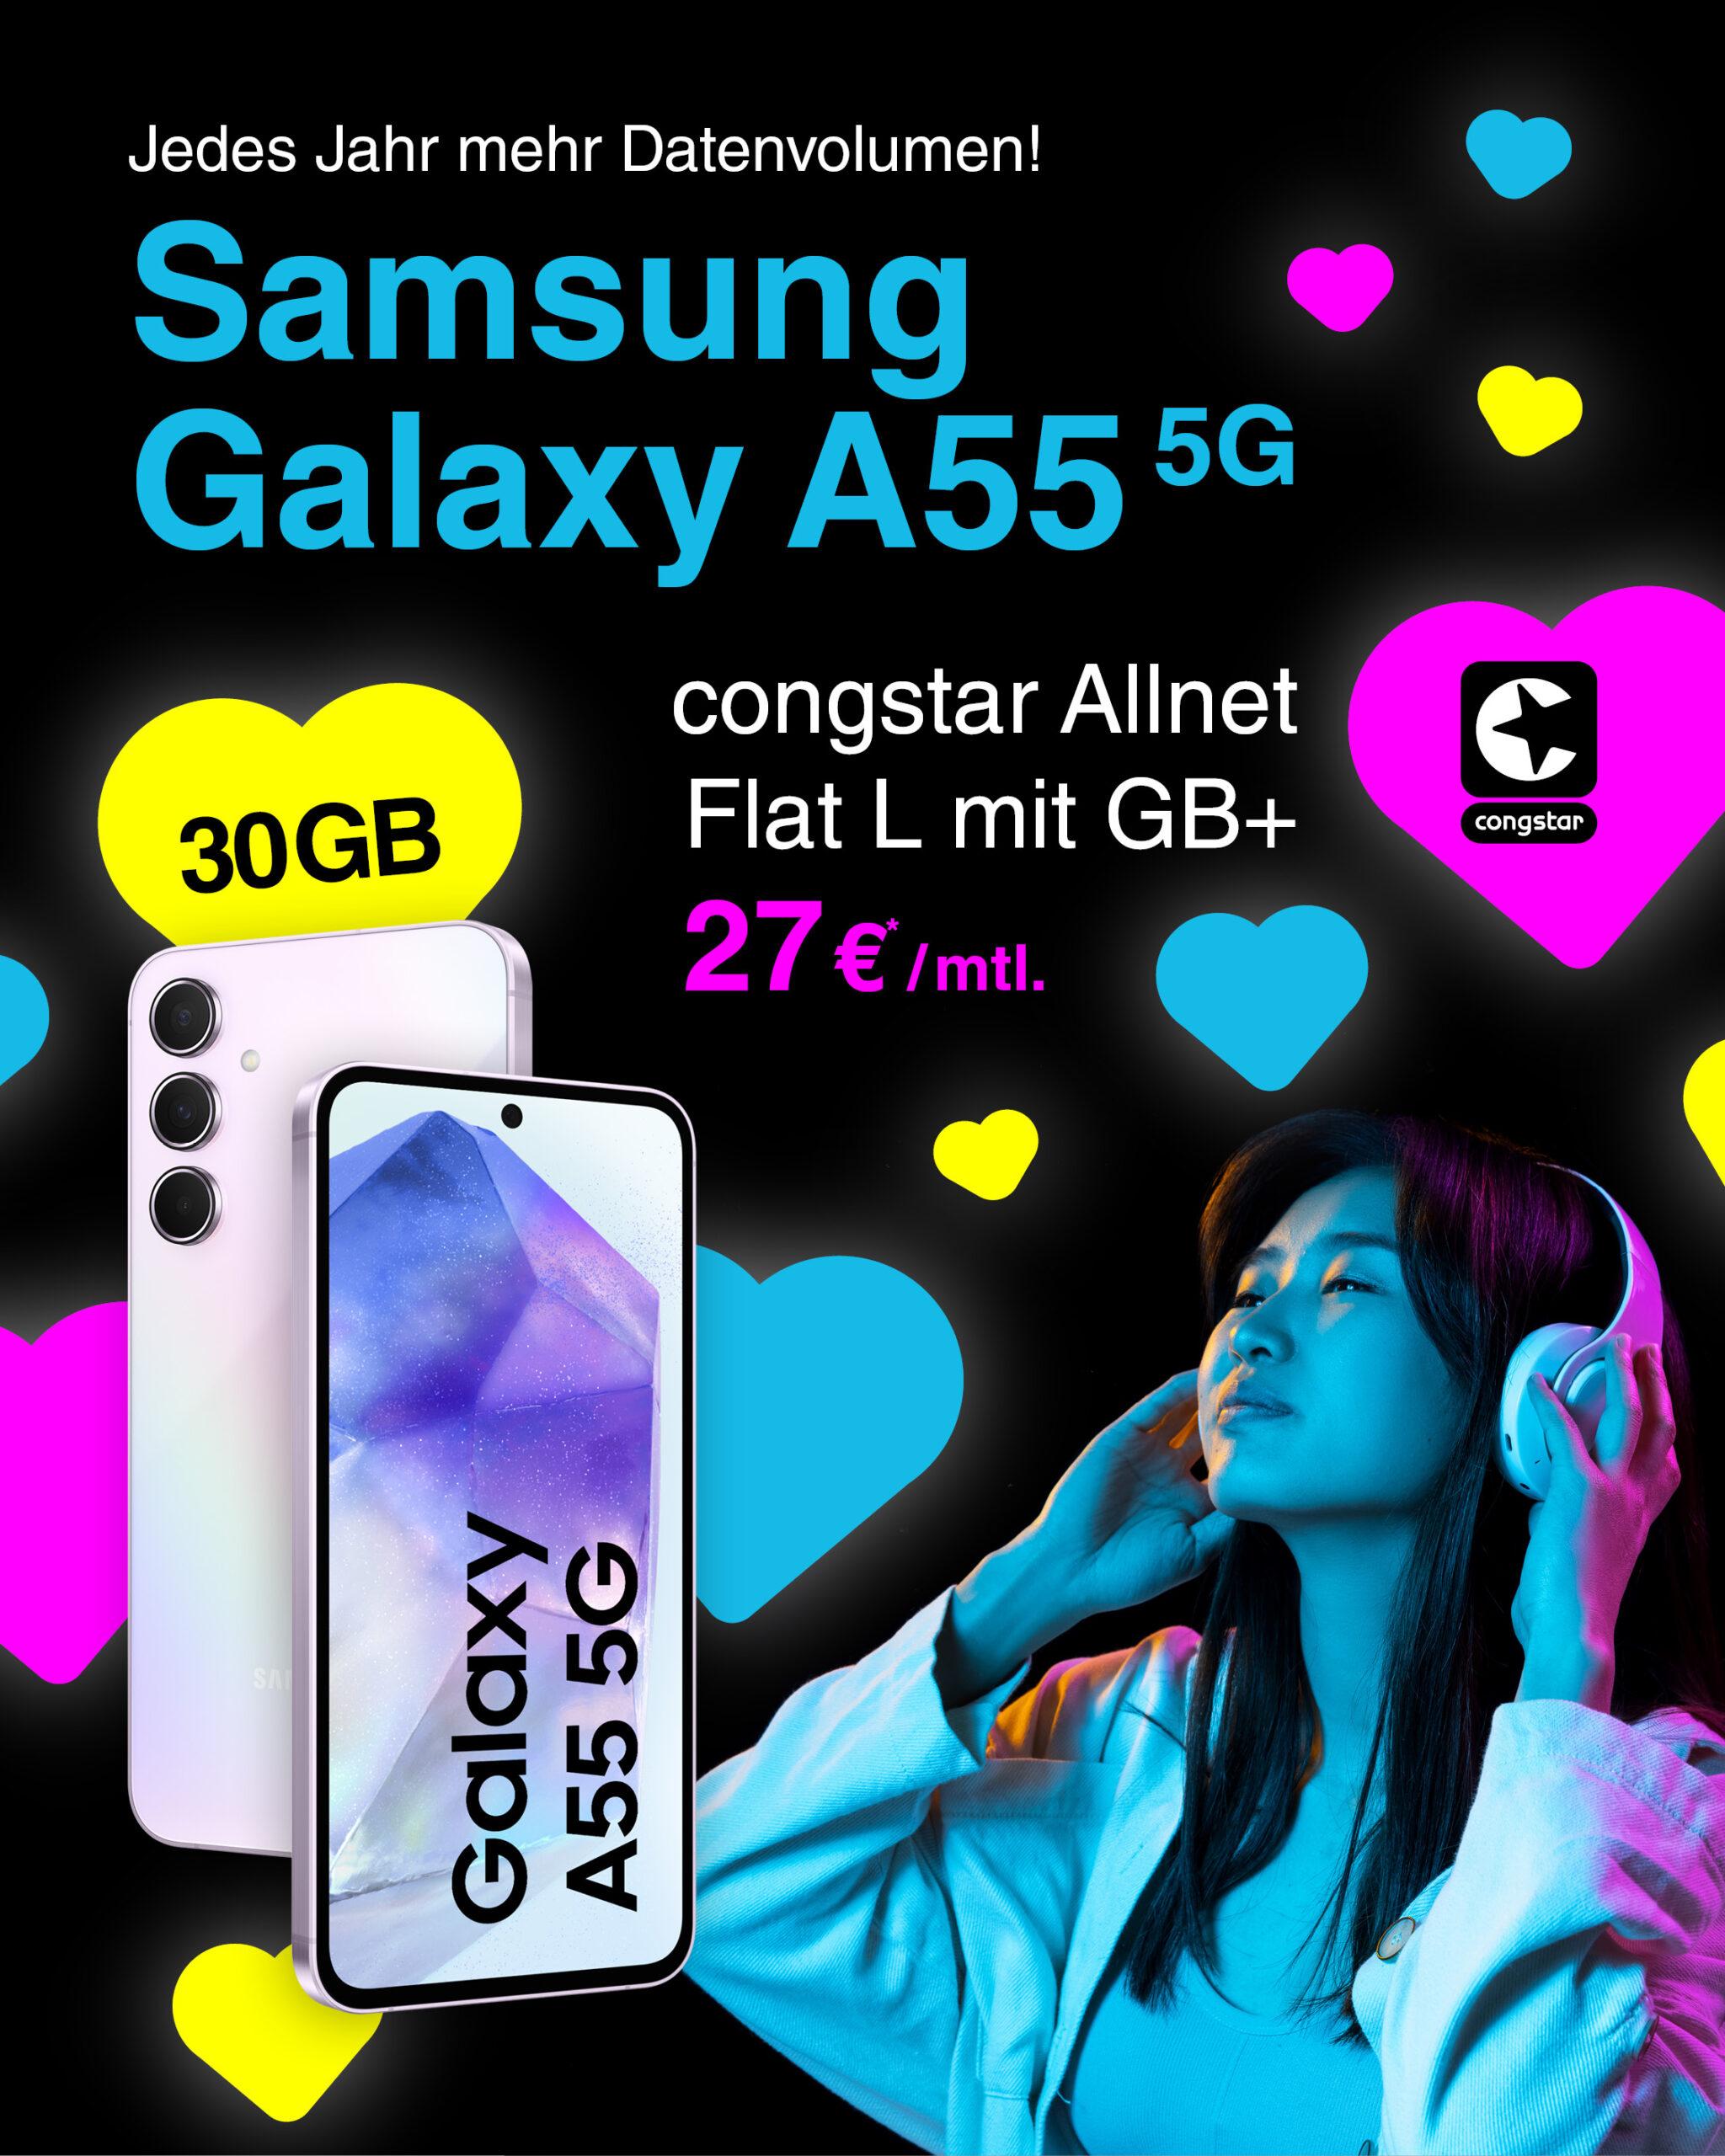 congstar Allnet Flat L mit GB+ und Samsung A55